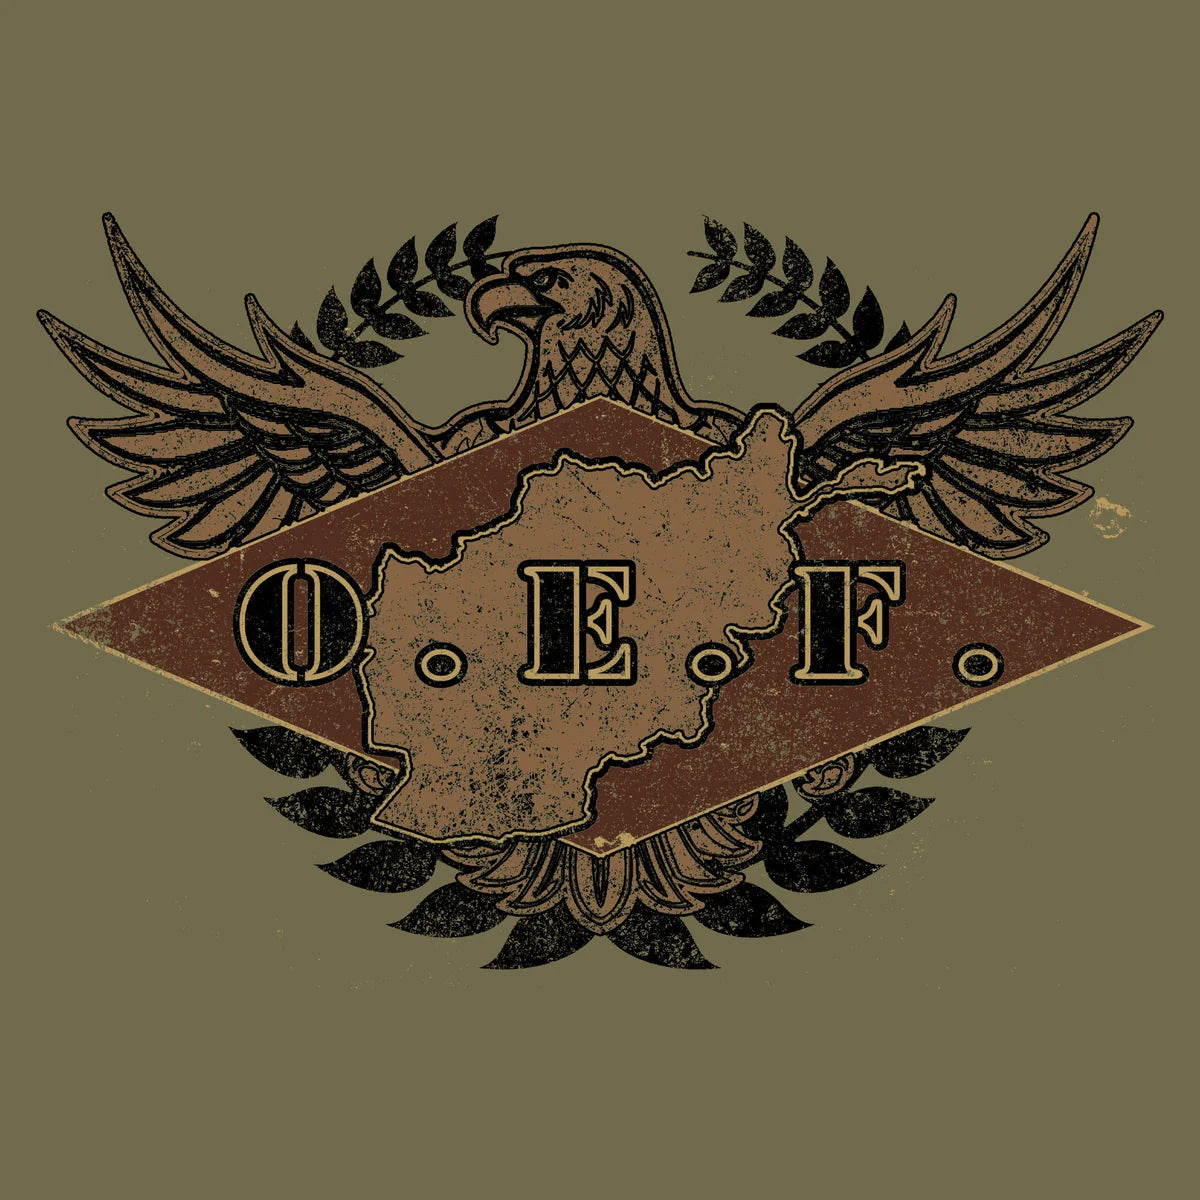 O.E.F Veteran Tee